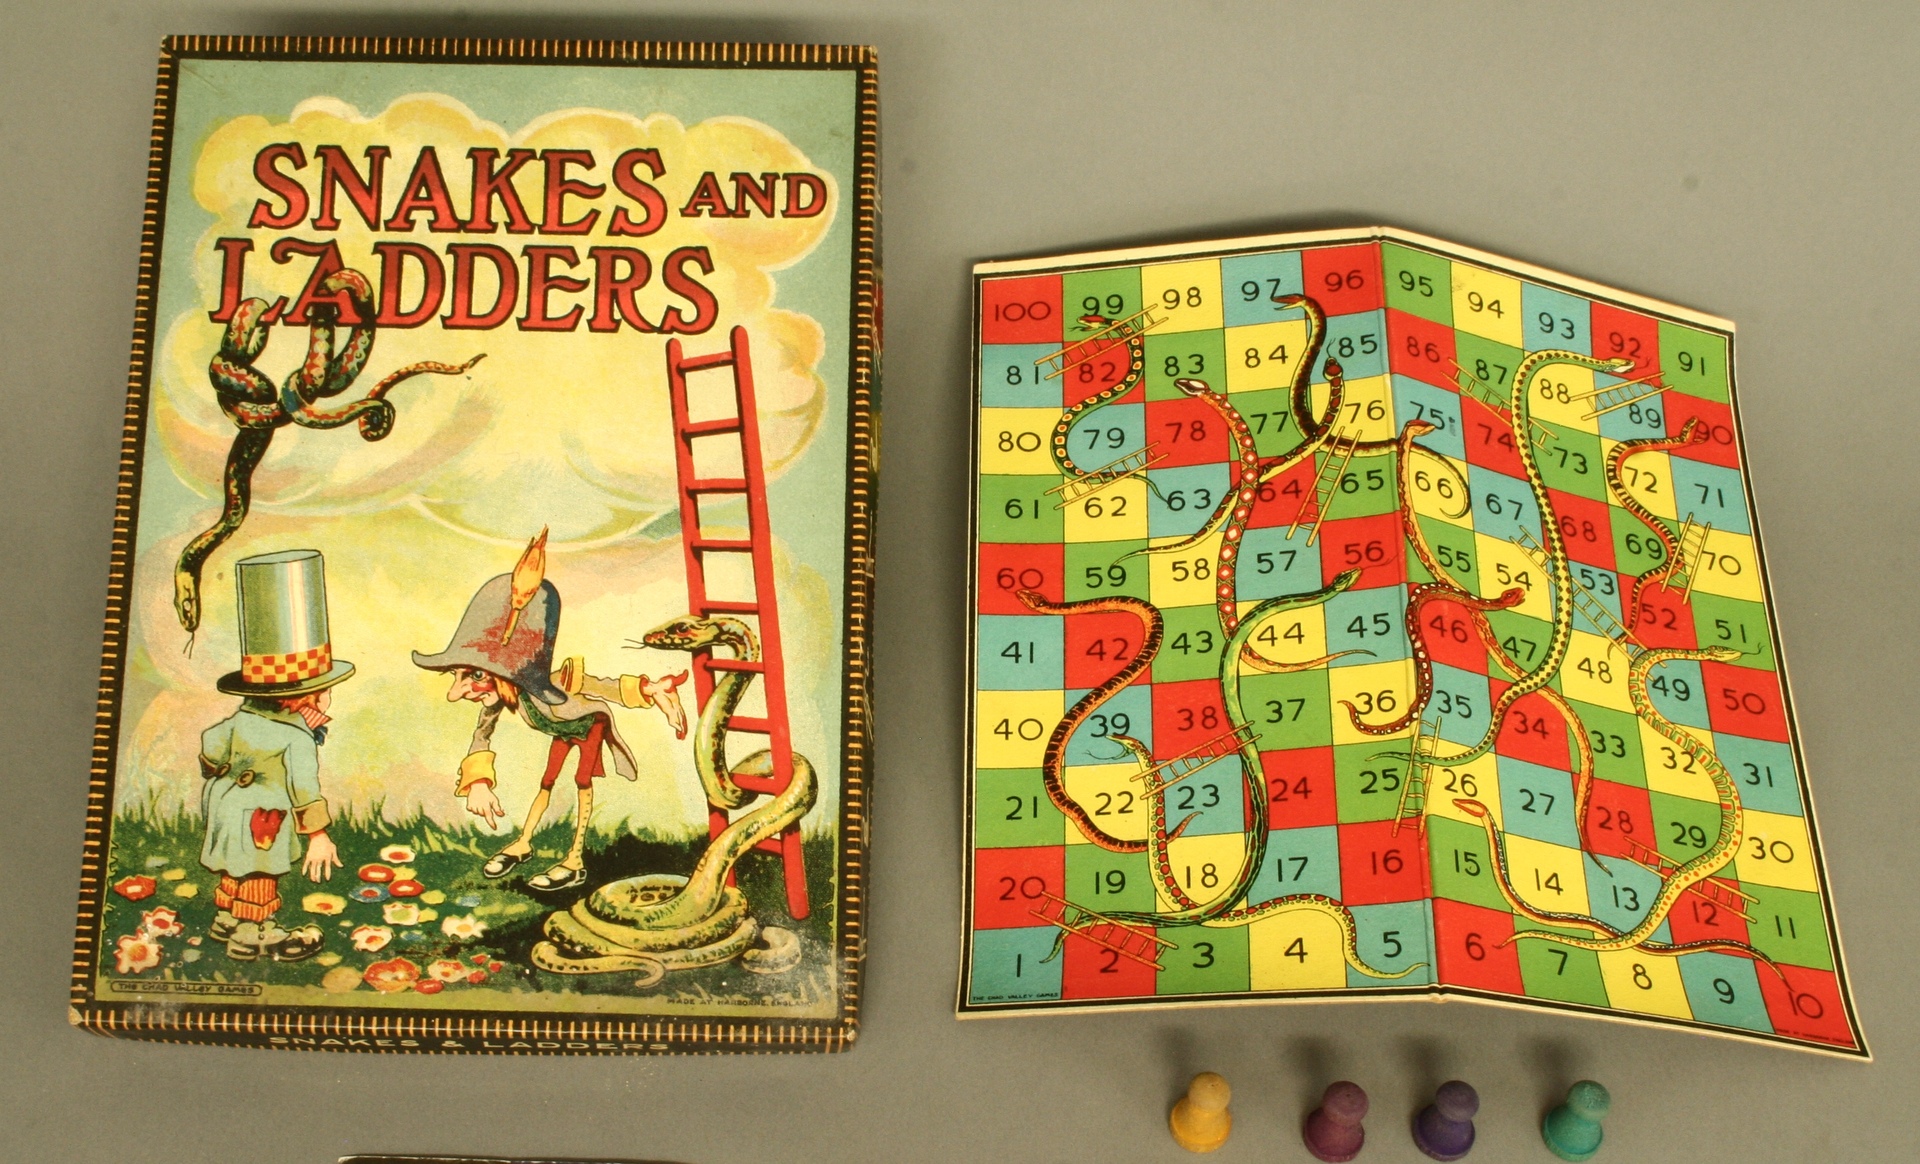 Snake - The Board Game by Maarten Krijgsman — Kickstarter